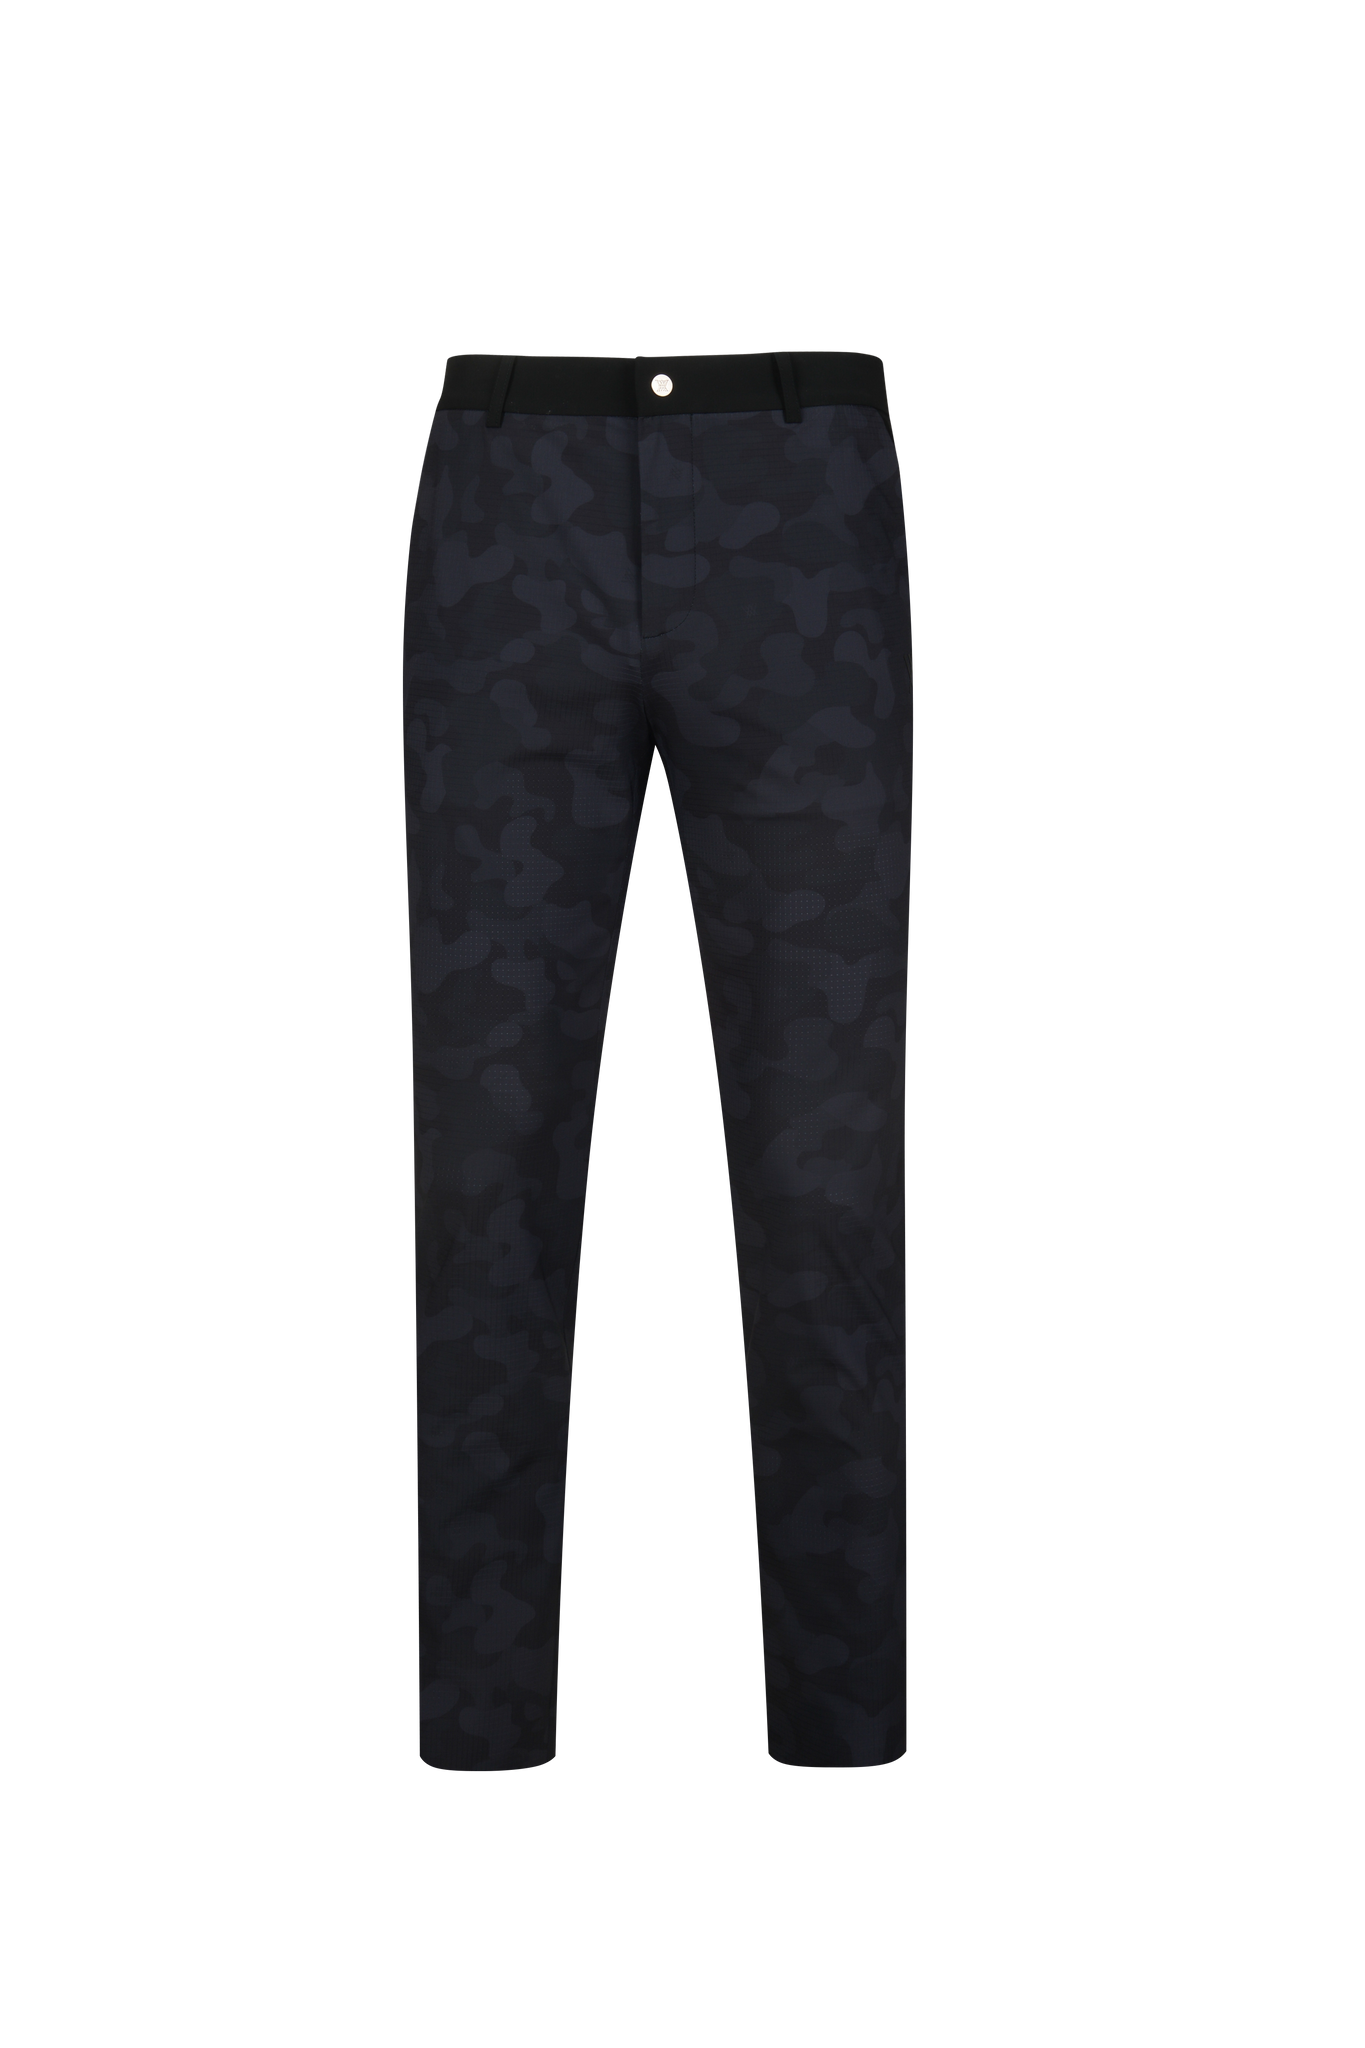 [Special Deal] Men's Camo Pattern Pants